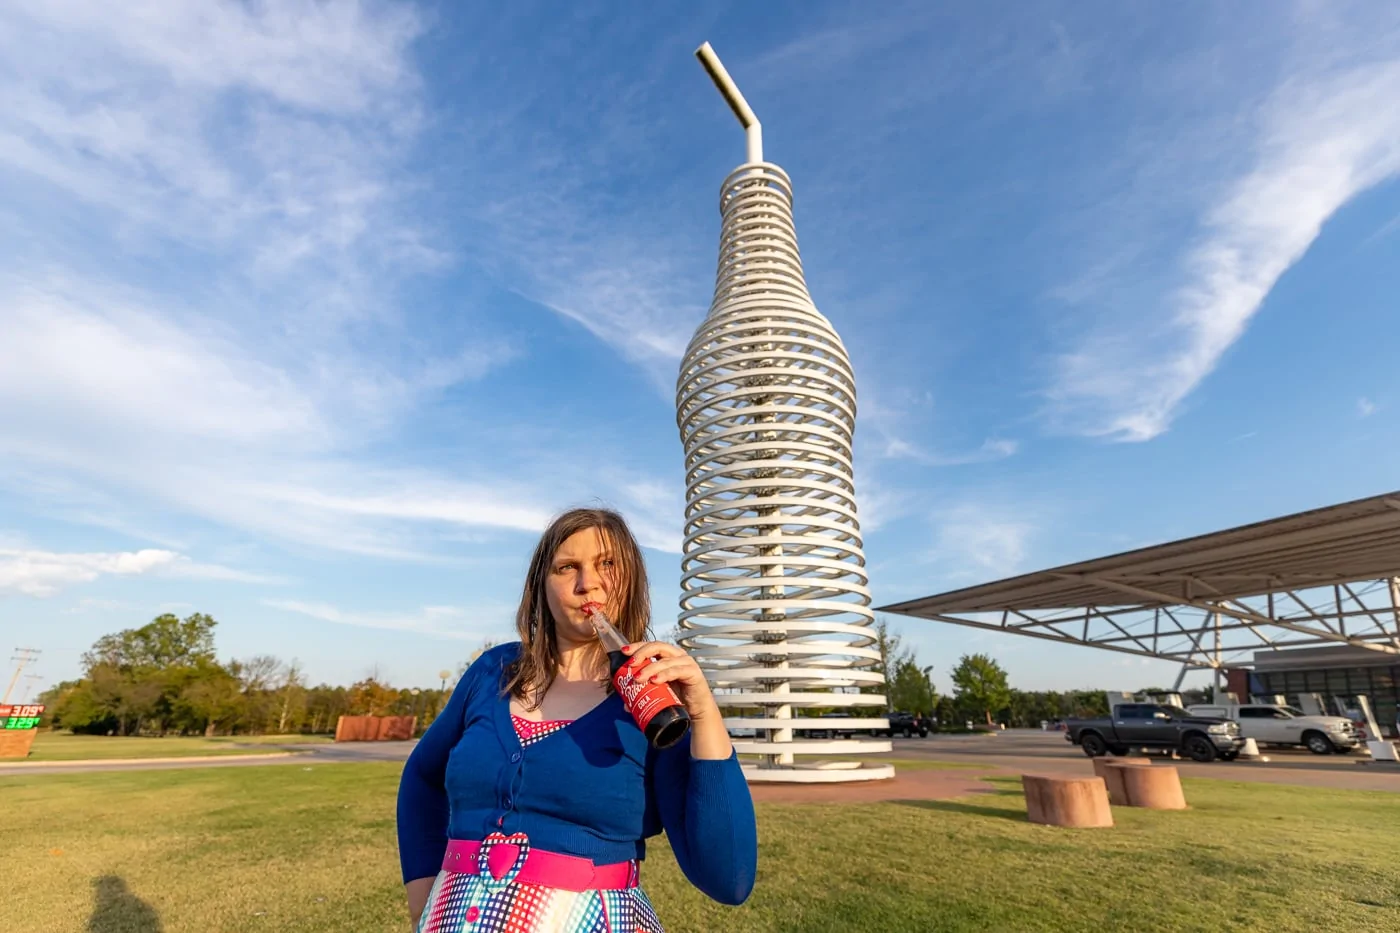 Pops 66 Soda Ranch & World's Largest Soda Bottle in Arcadia, Oklahoma Route 66 Roadside Attraction